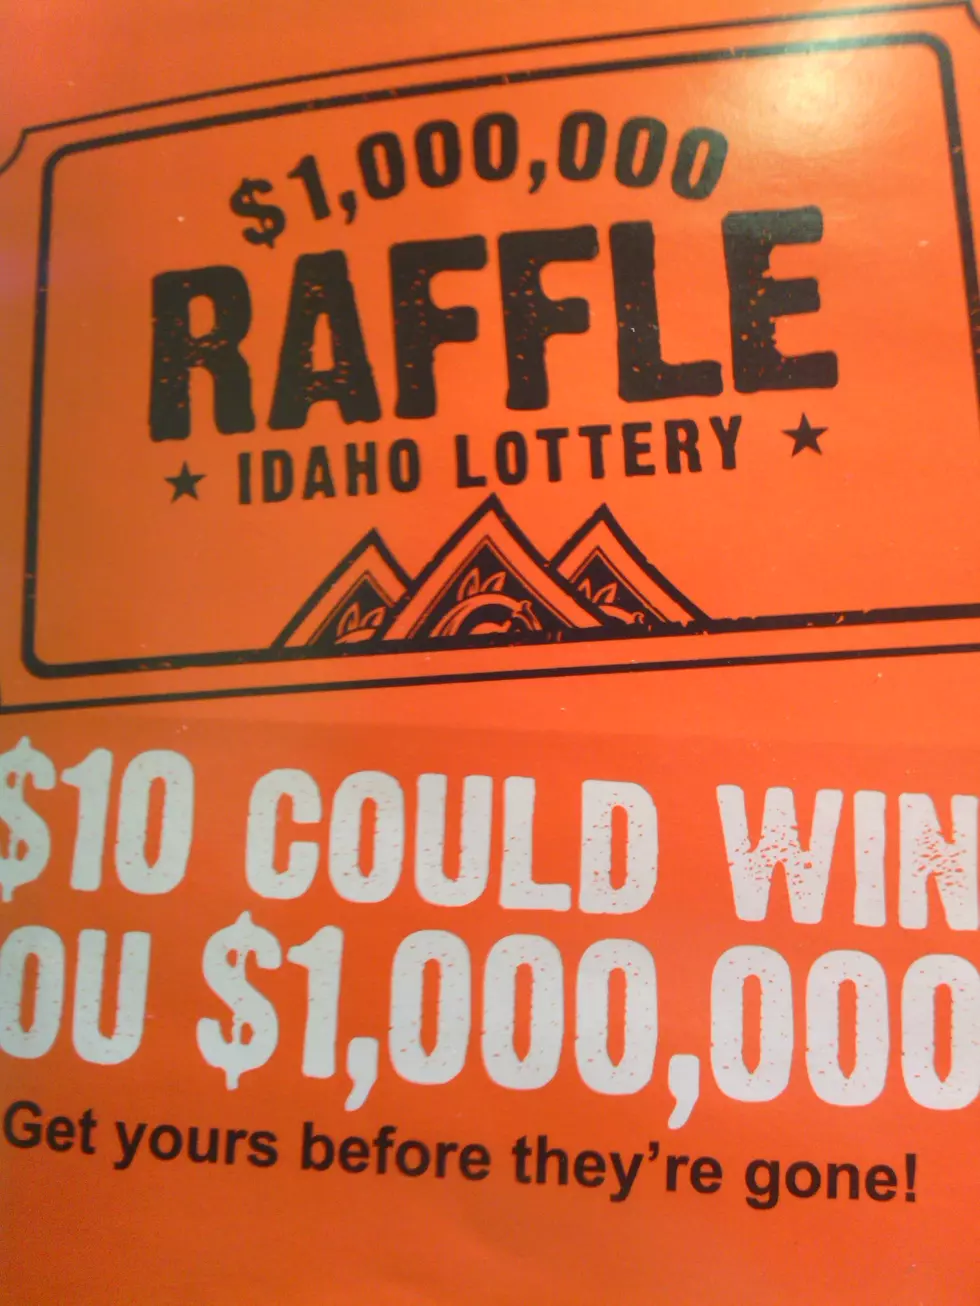 $1 Million Raffle Goes on Sale in Idaho